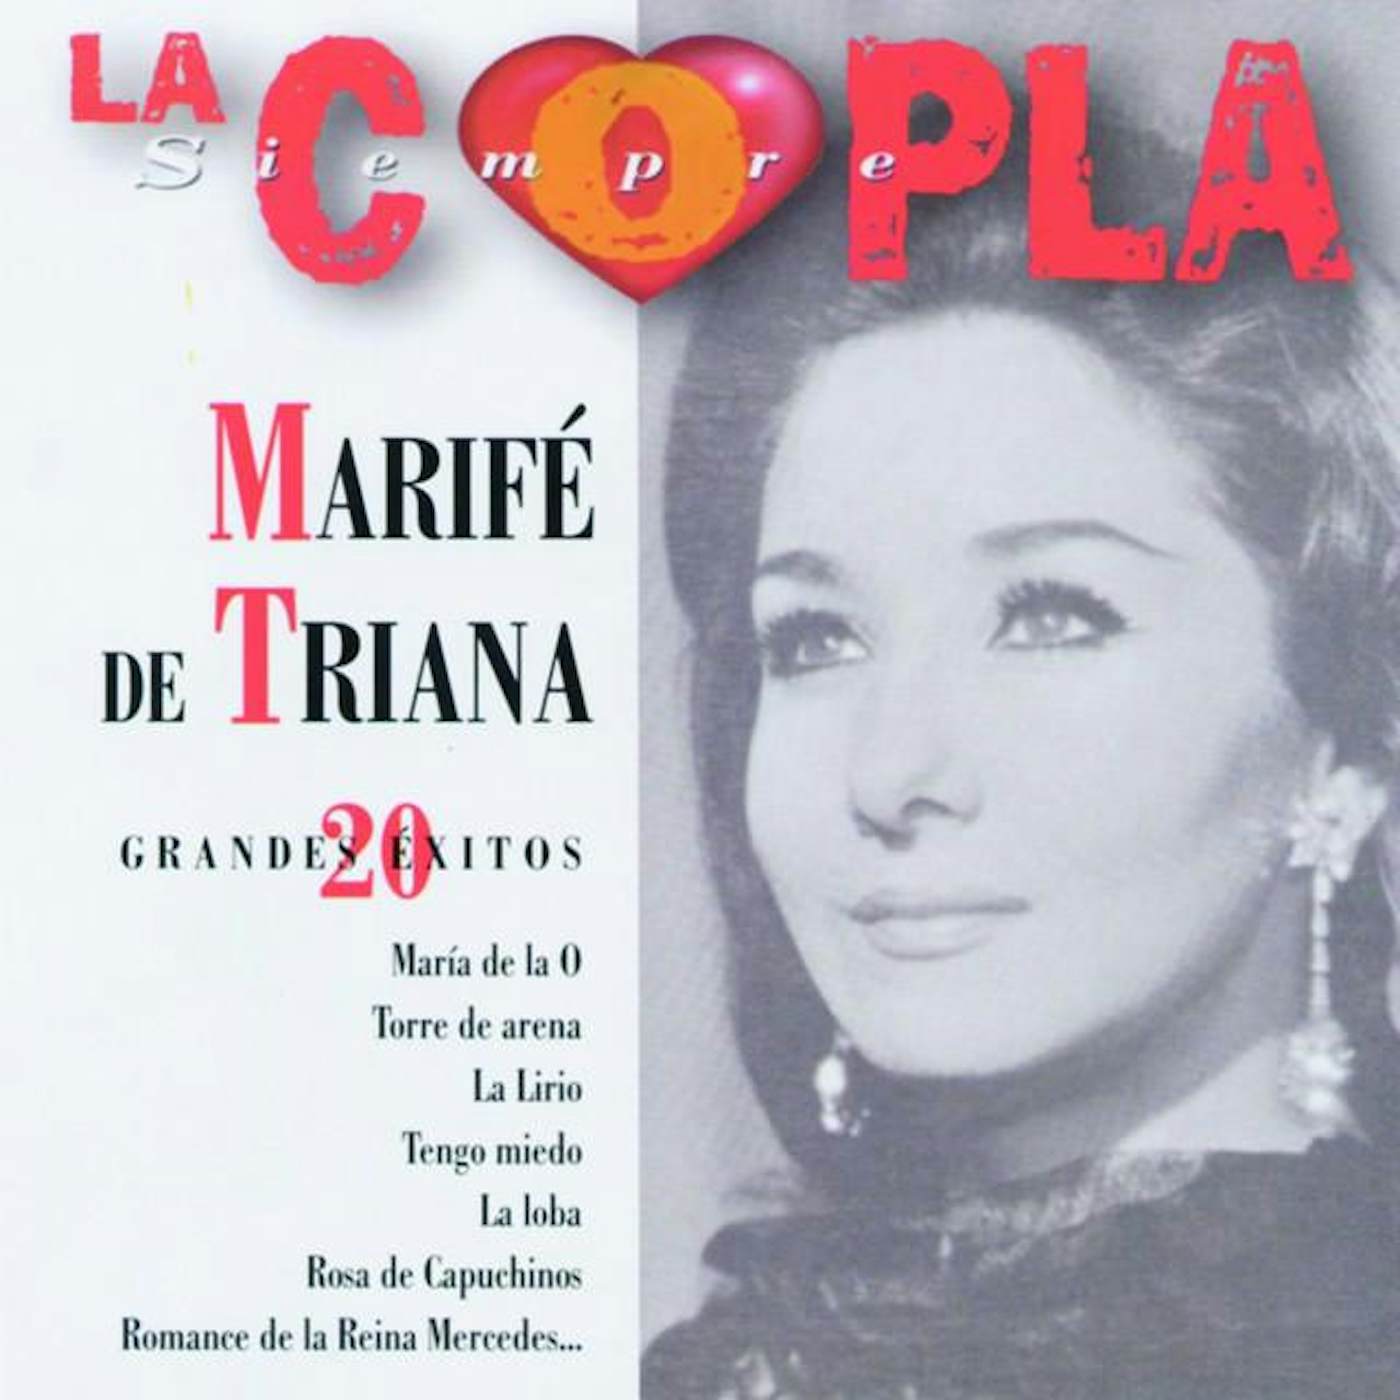 Marife De Triana